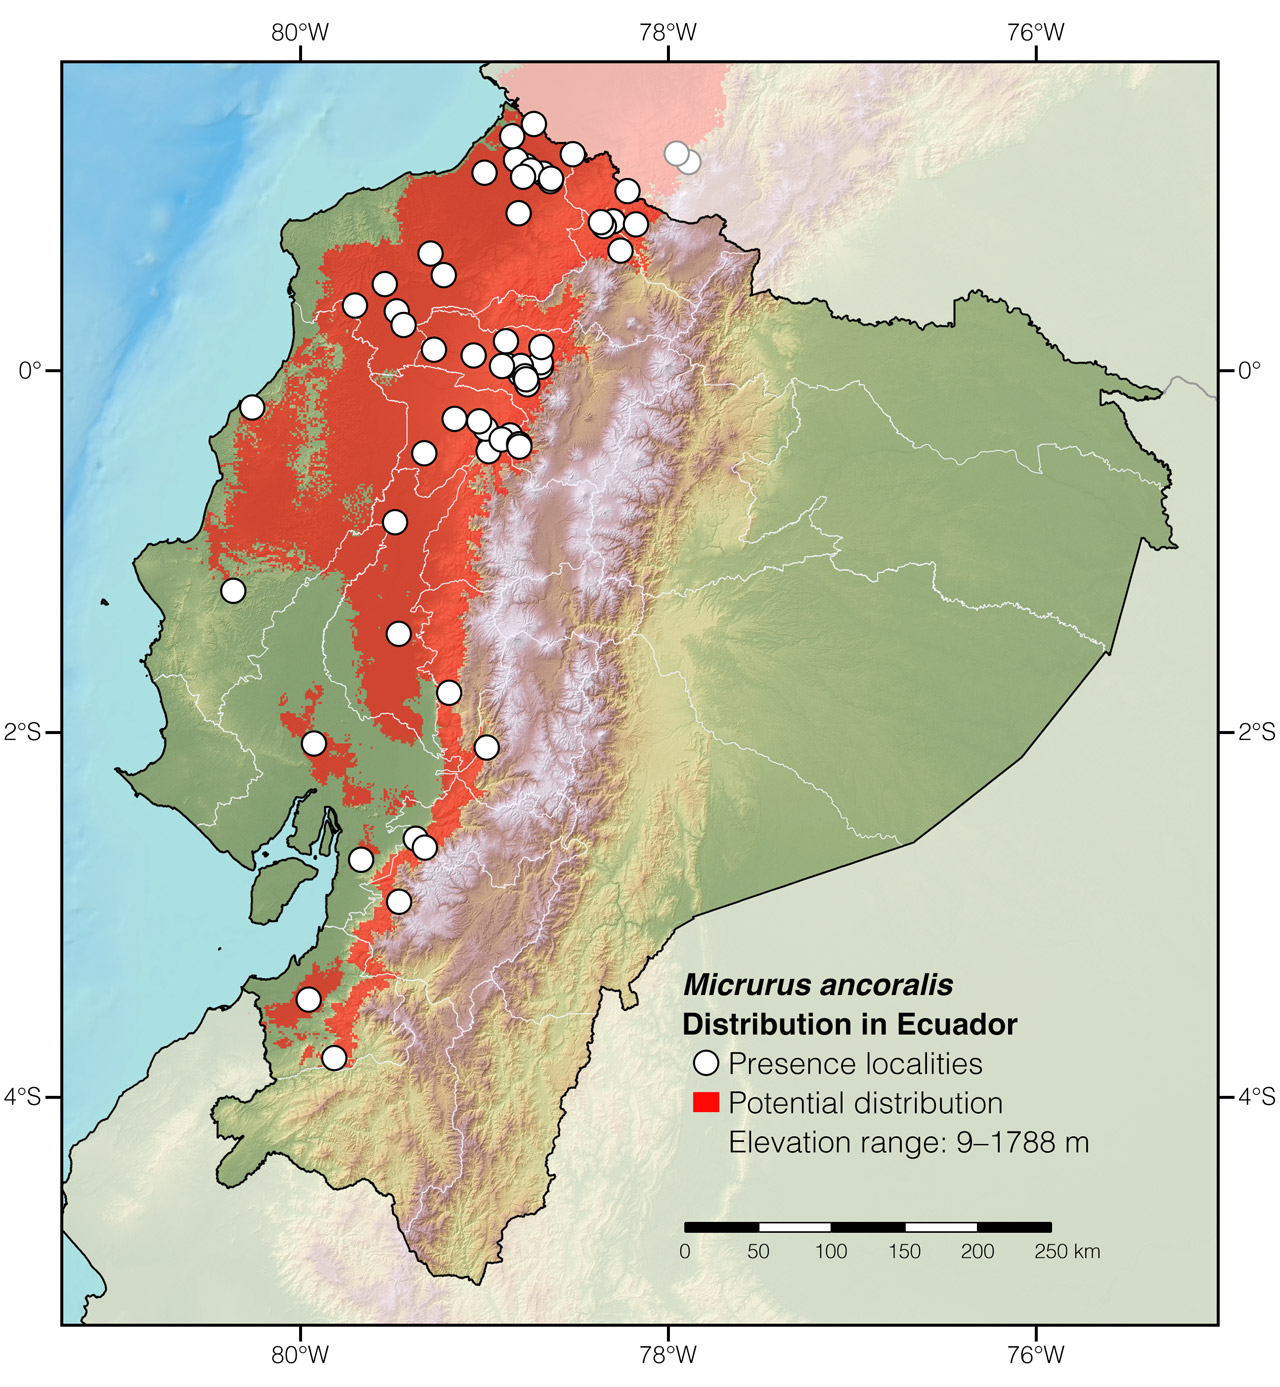 Distribution of Micrurus ancoralis in Ecuador